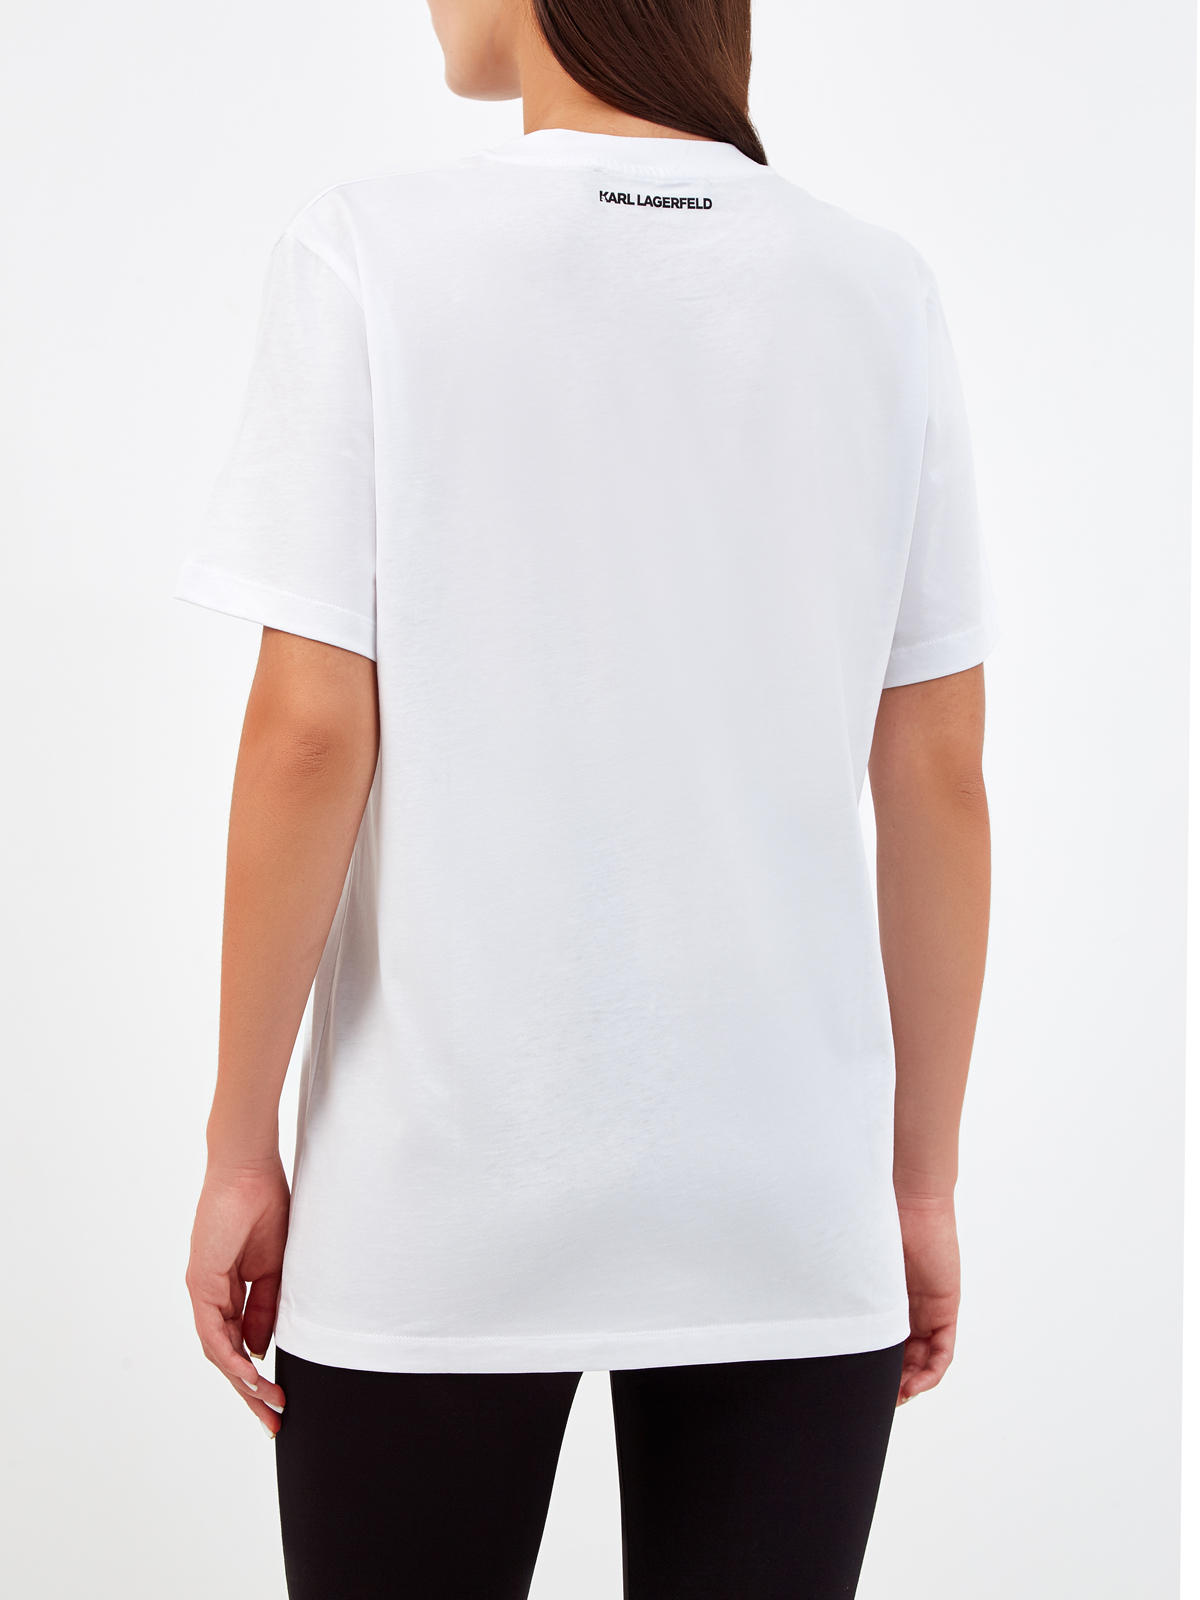 Свободная футболка Ultimate Icon из джерси с архивным принтом KARL LAGERFELD, цвет белый, размер S;M;L;XL - фото 4